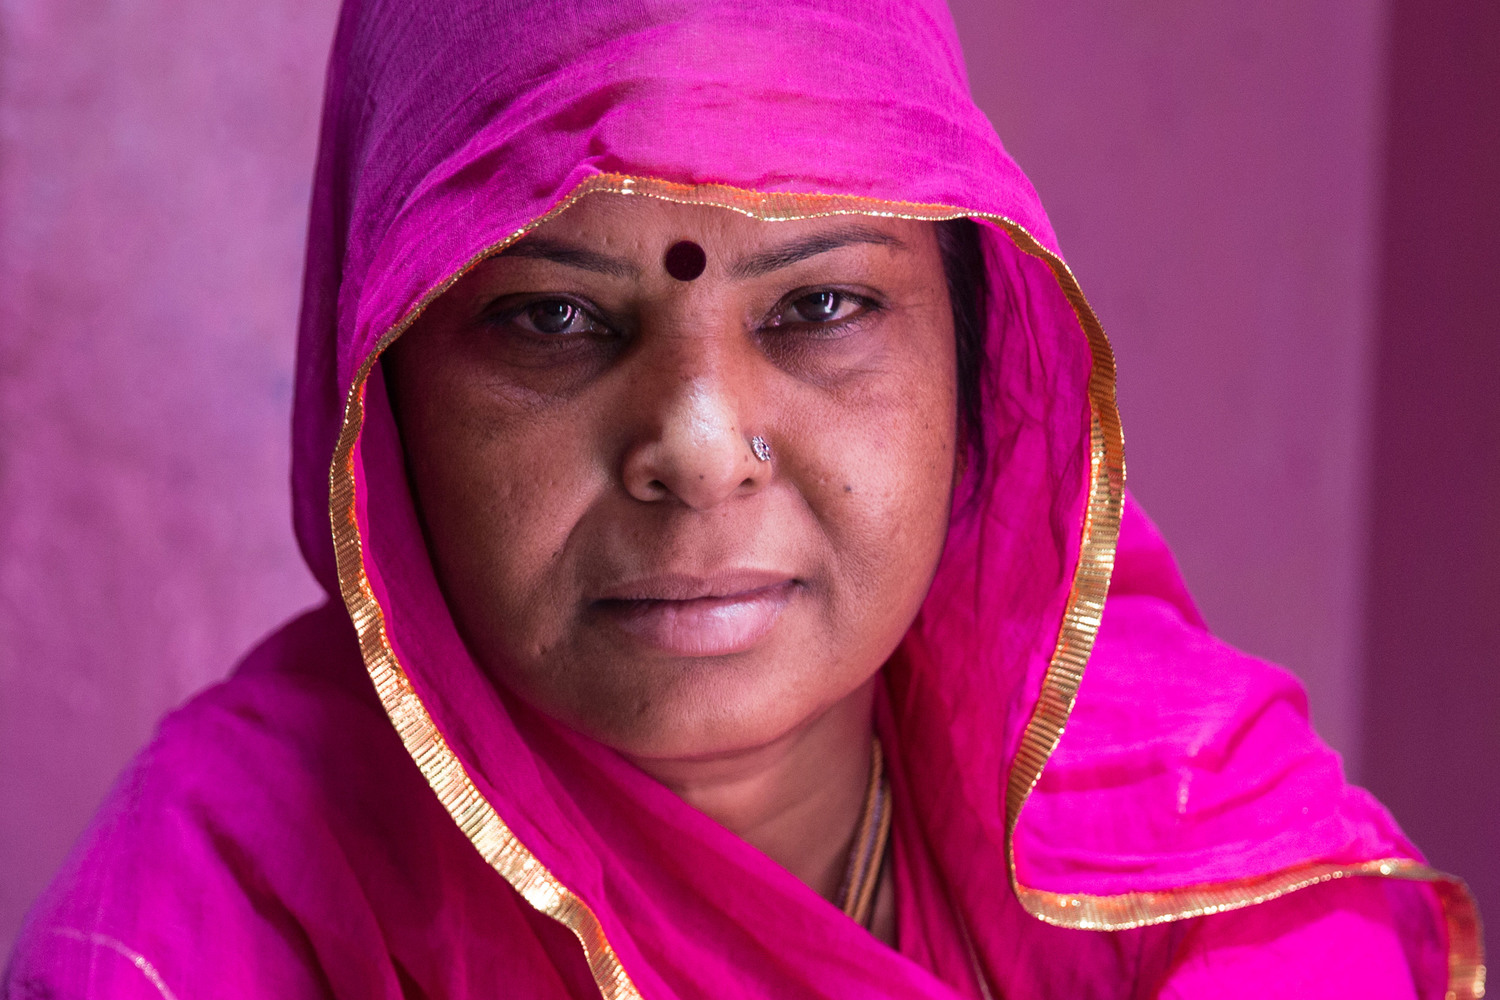  Nand Kawar, 48, lives with her four adult children and their families. Her grandchildren attend an Opus III school. 